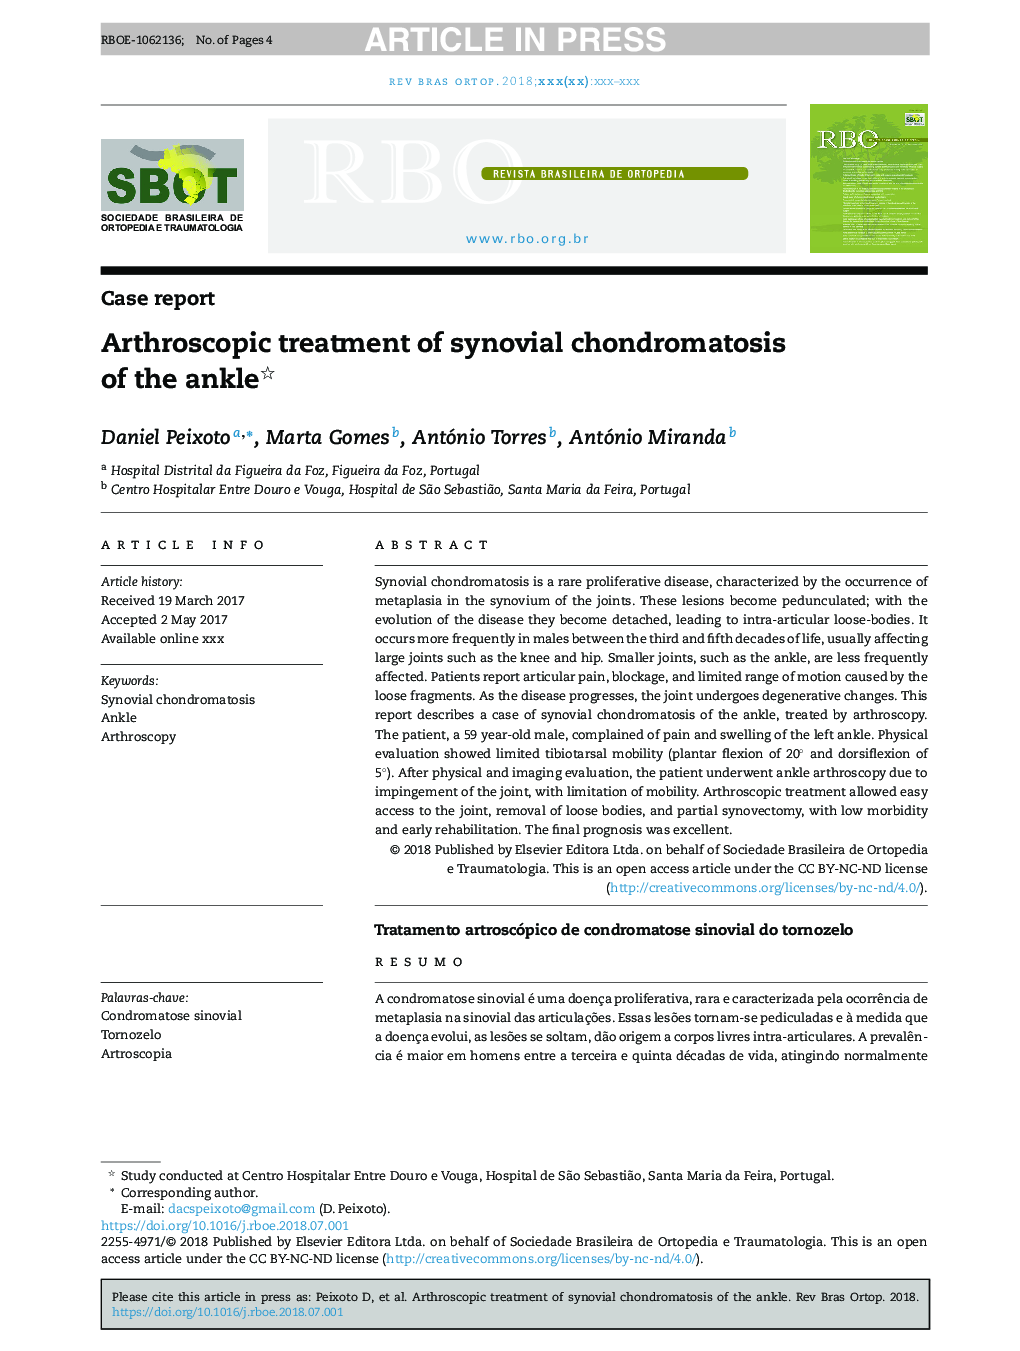 درمان آرتروسکوپی سینوویال کوندروماتوزیس قوزک پا